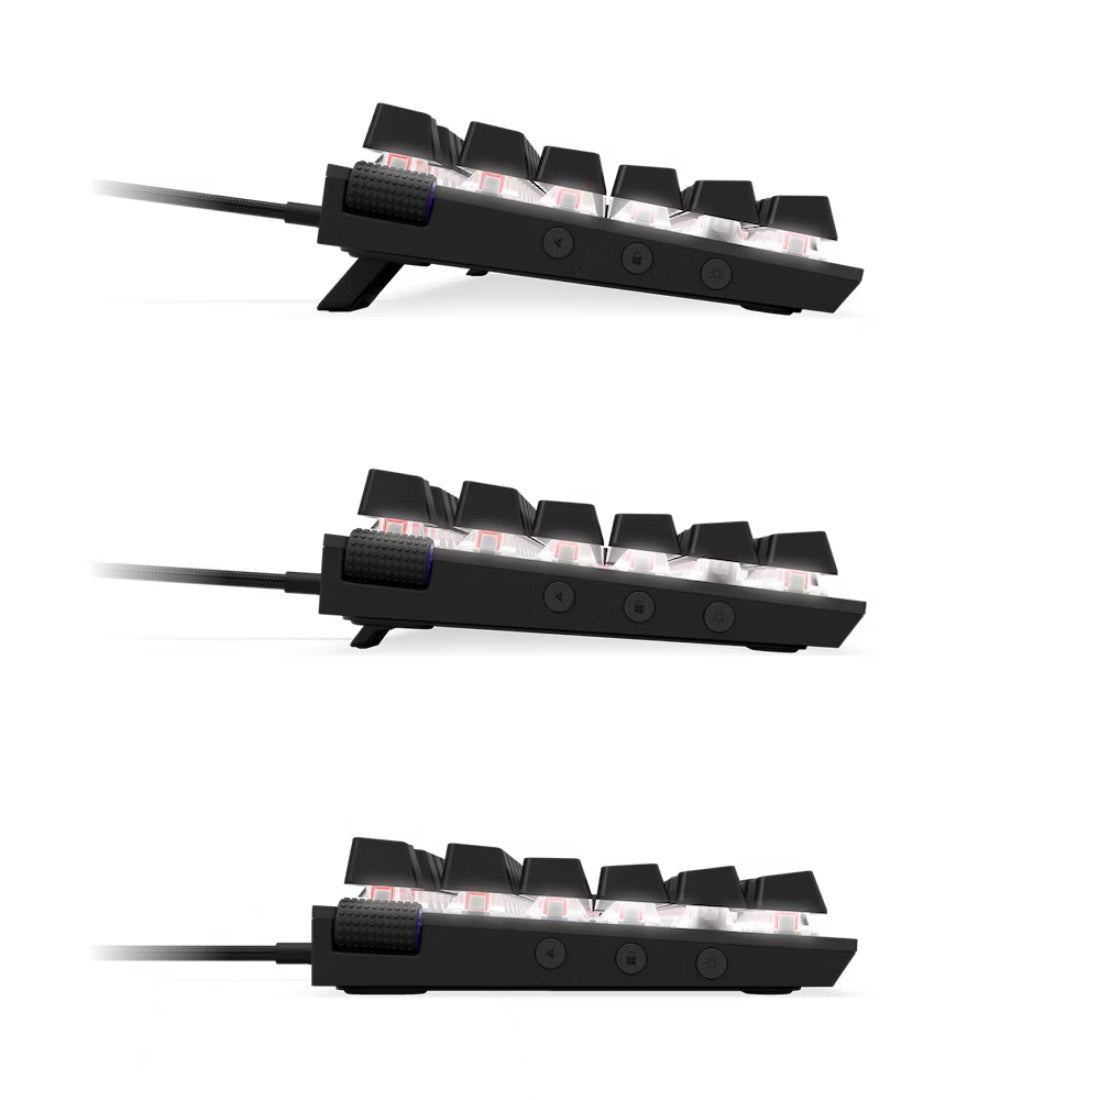 NZXT Function Mini TKL Mechanical Gaming Keyboard - Black - لوحة مفاتيح - Store 974 | ستور ٩٧٤